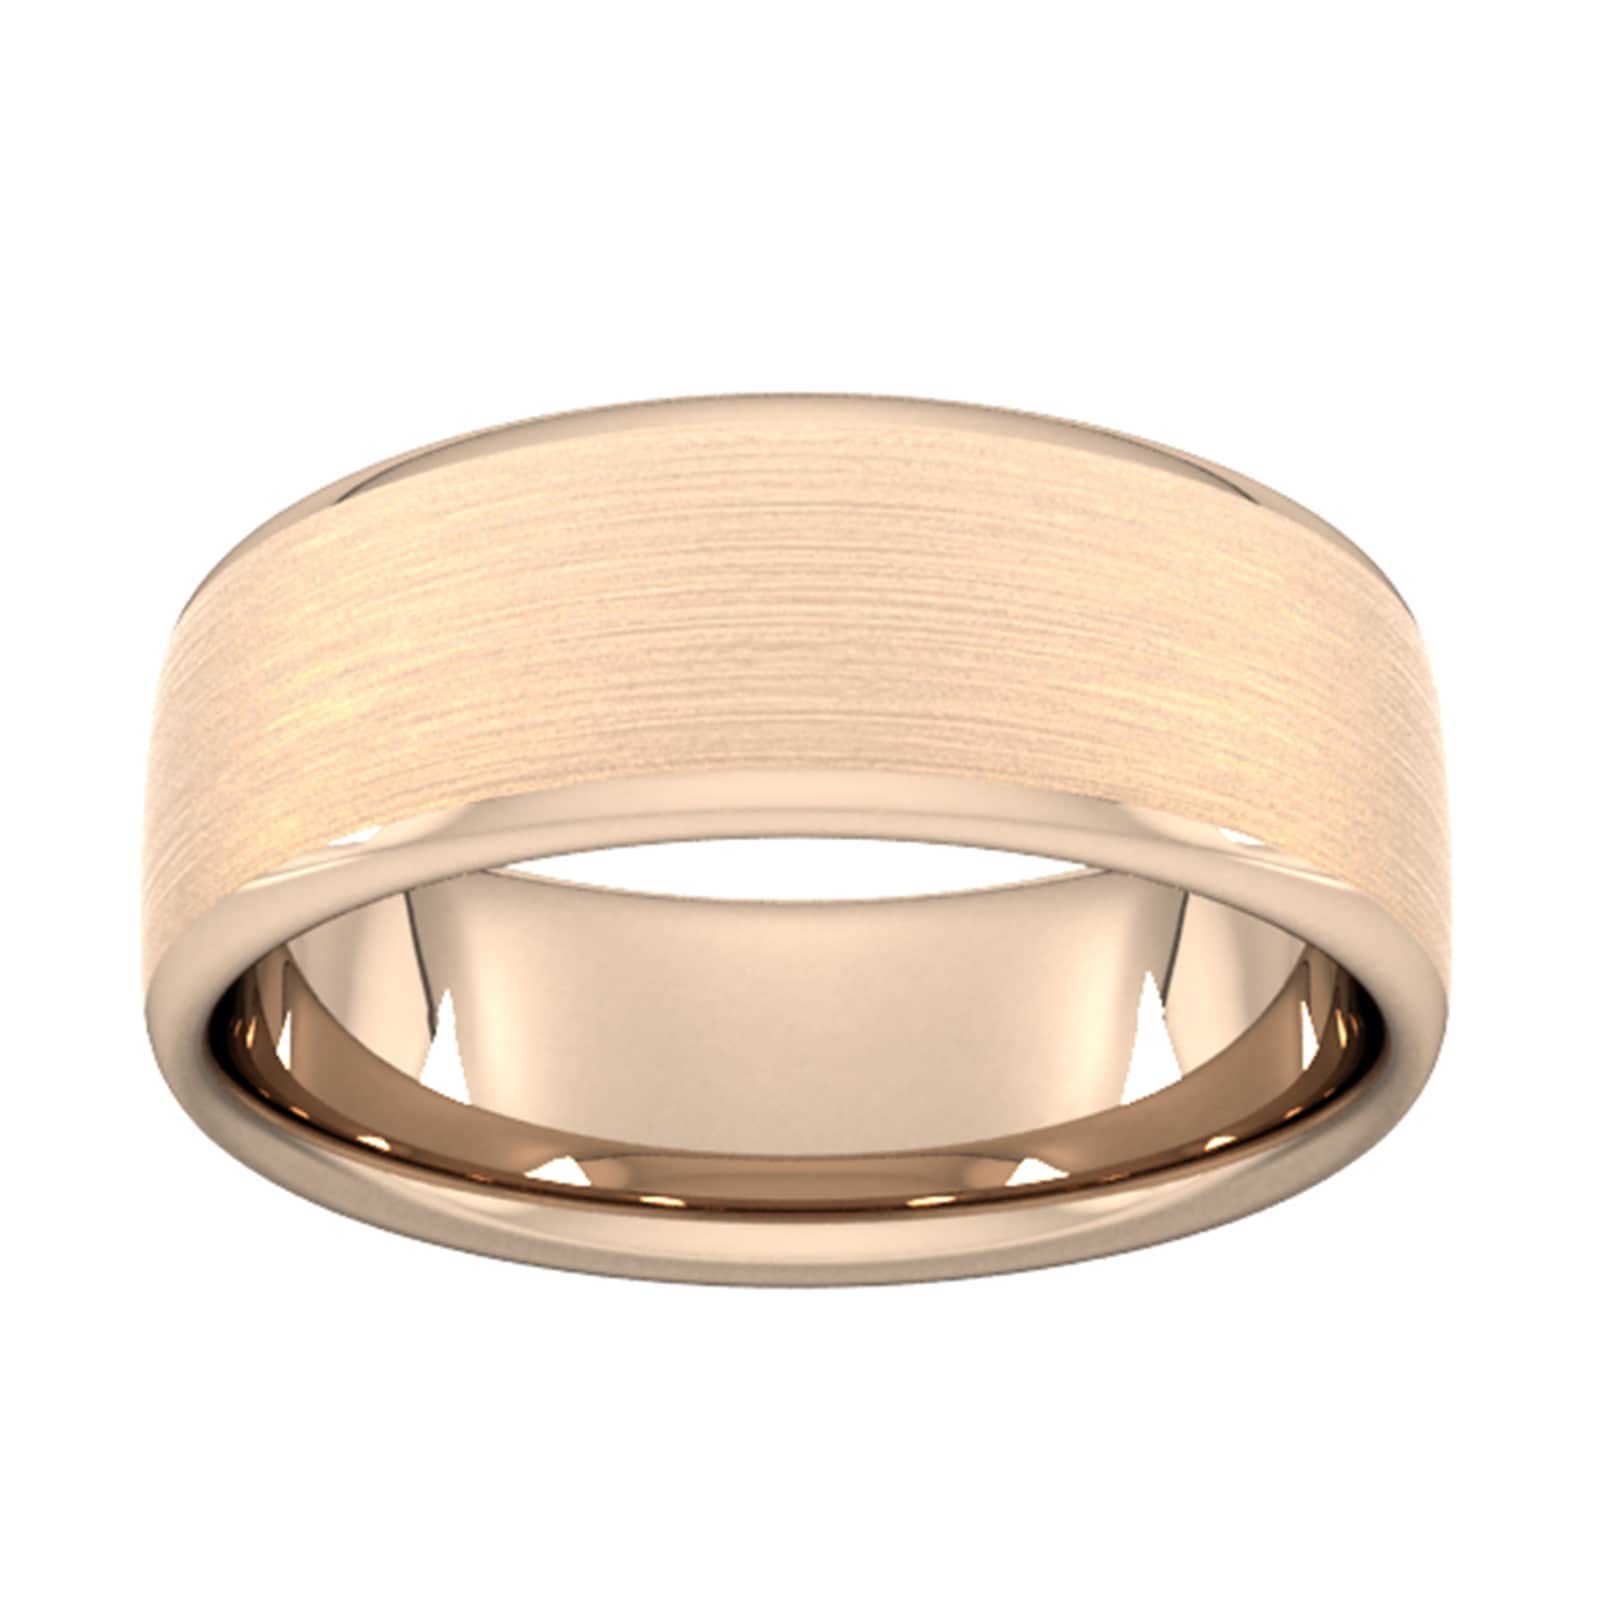 8mm Slight Court Extra Heavy Matt Finished Wedding Ring In 9 Carat Rose Gold - Ring Size N